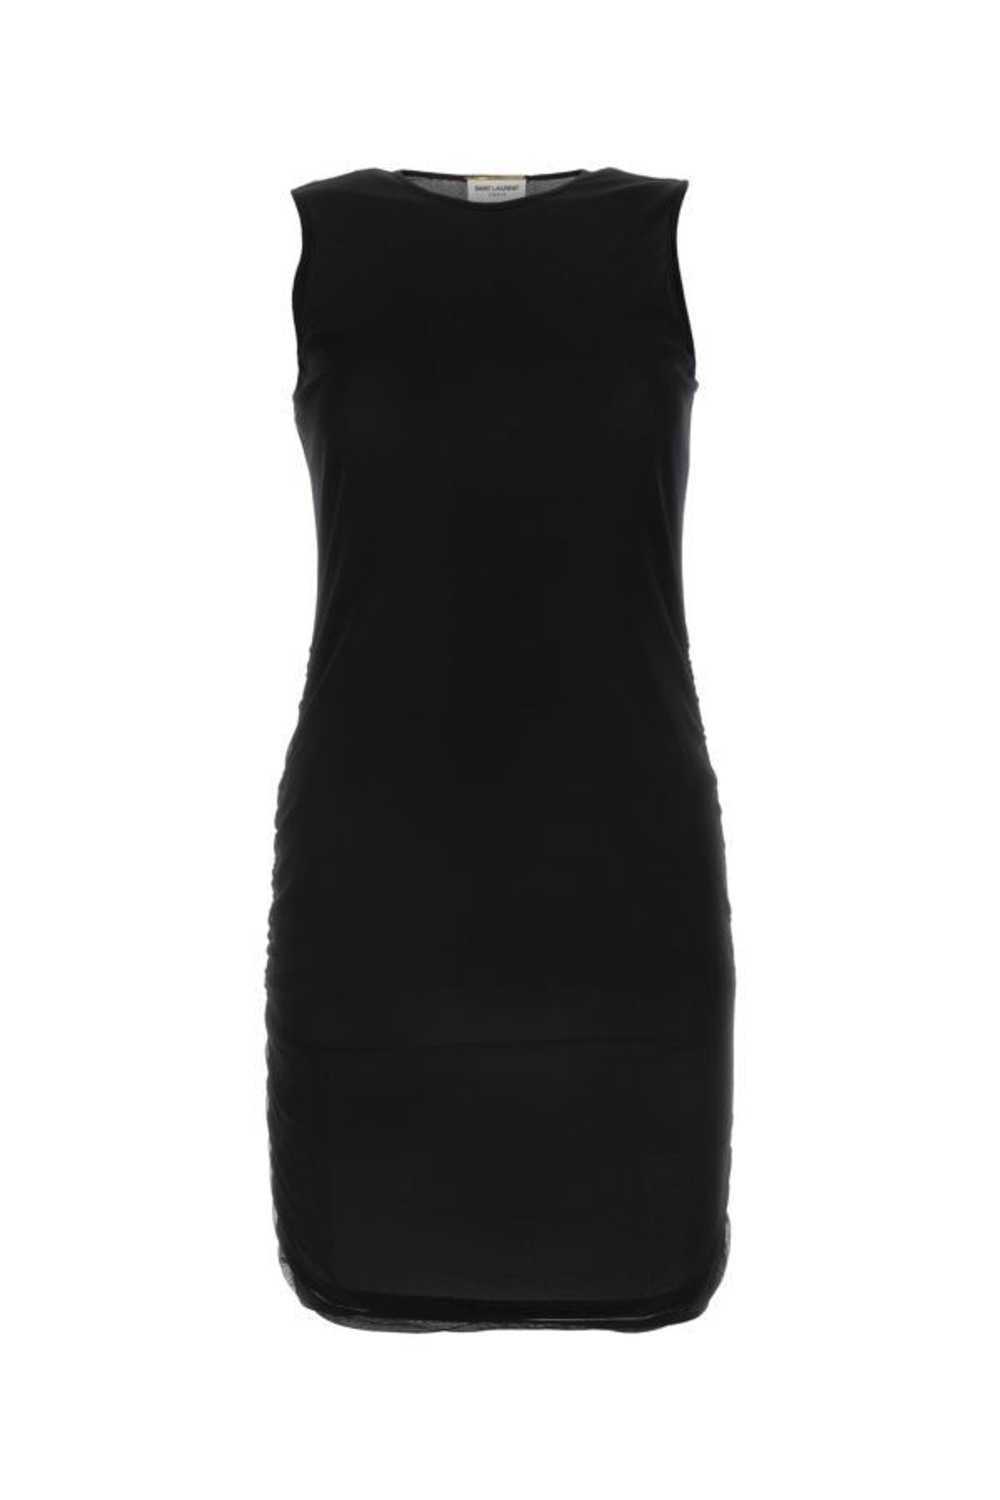 Saint Laurent Paris Black Nylon Mini Dress - image 3